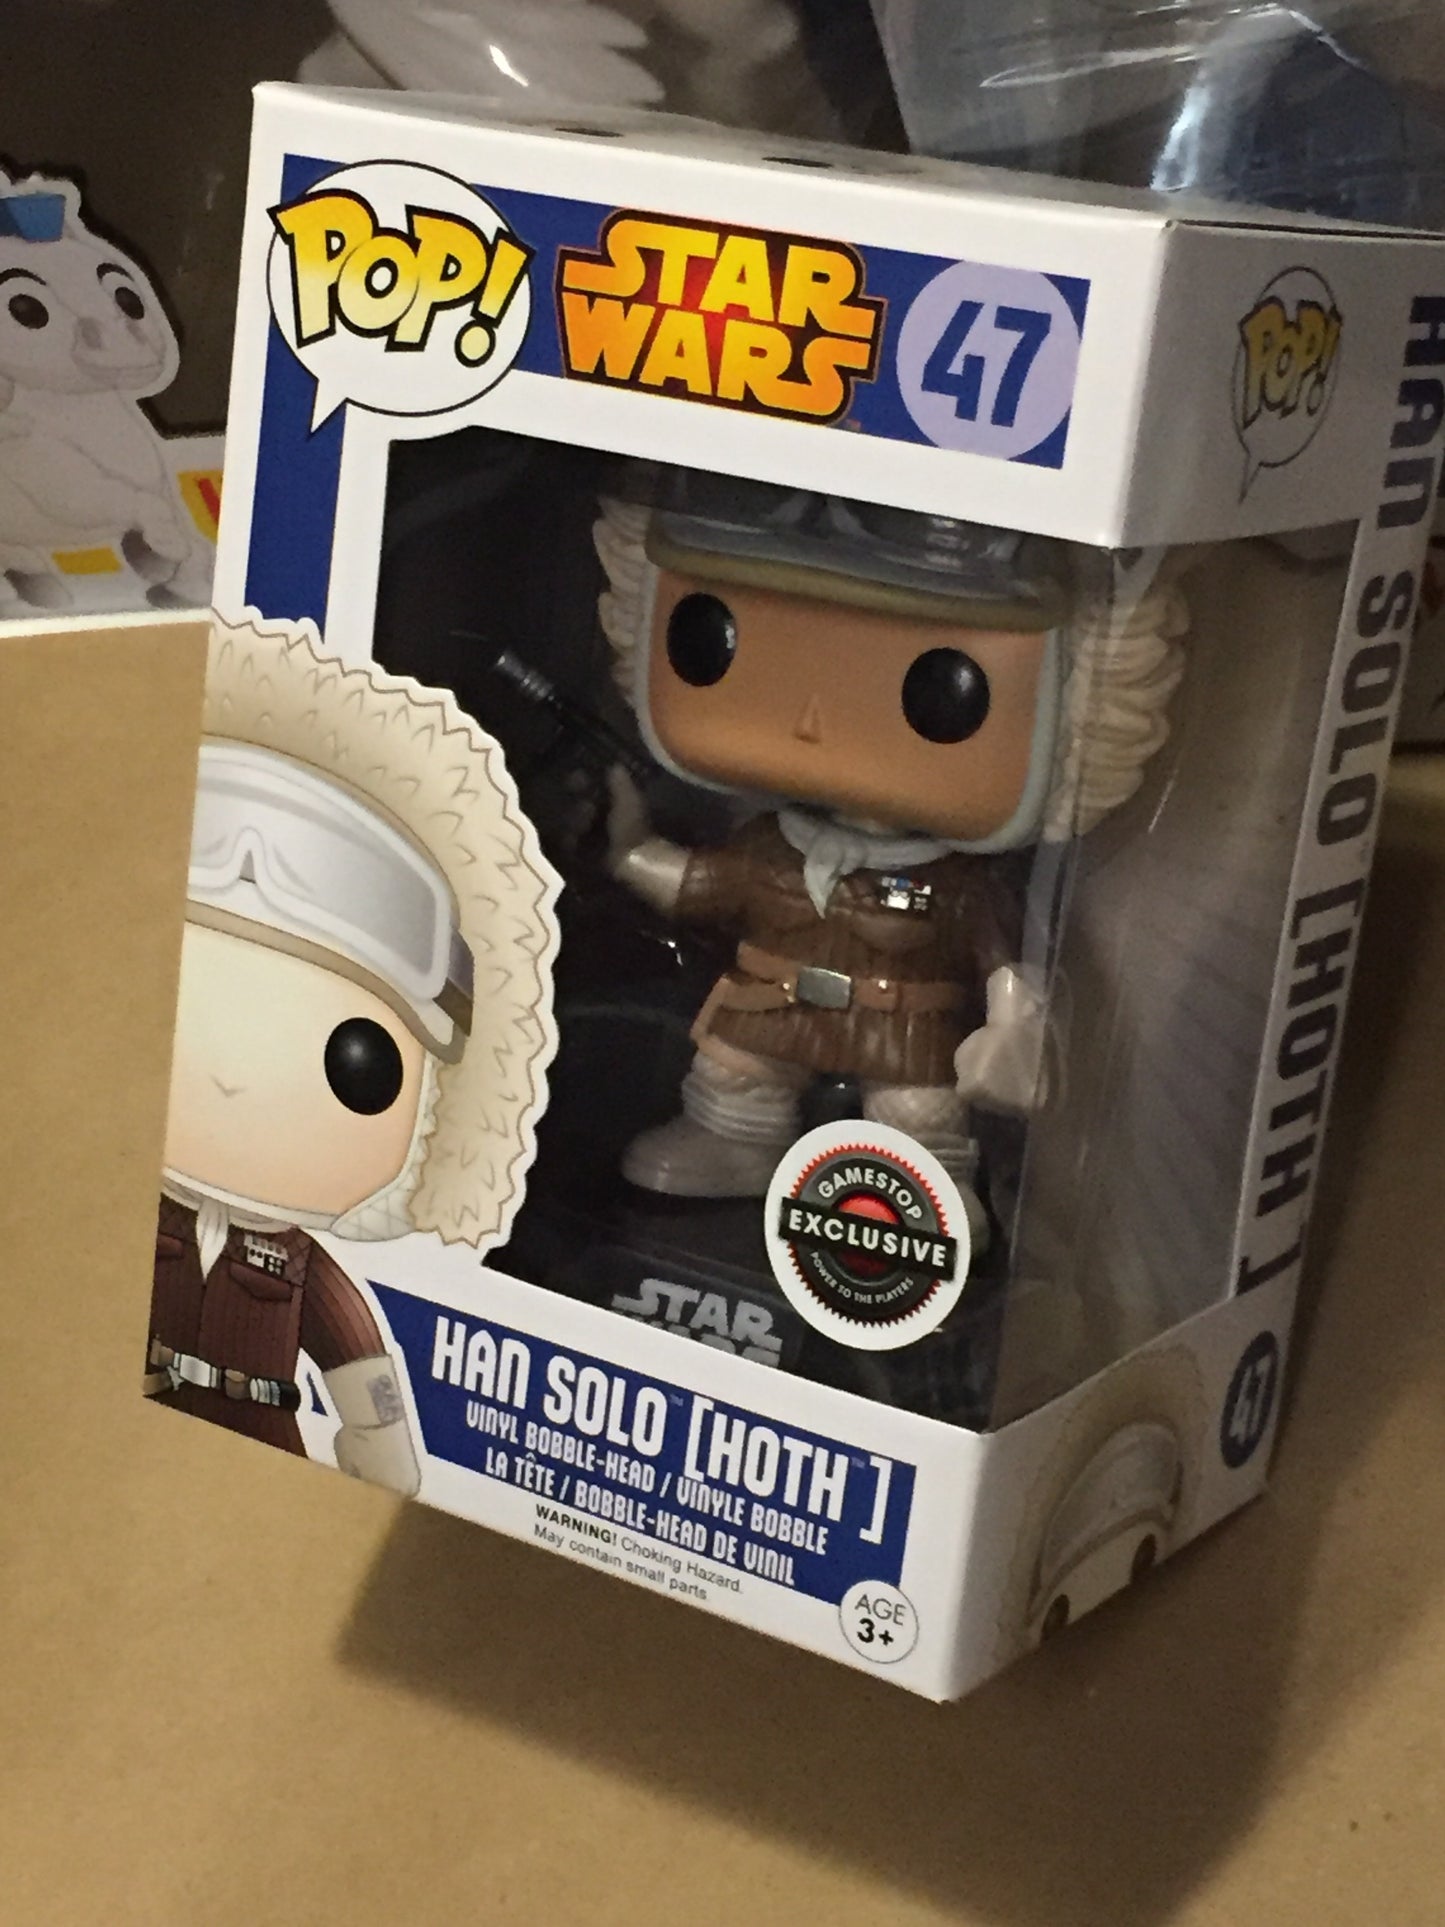 Star Wars Han Solo Hoth 47 Exclusive Funko Pop! Vinyl figure